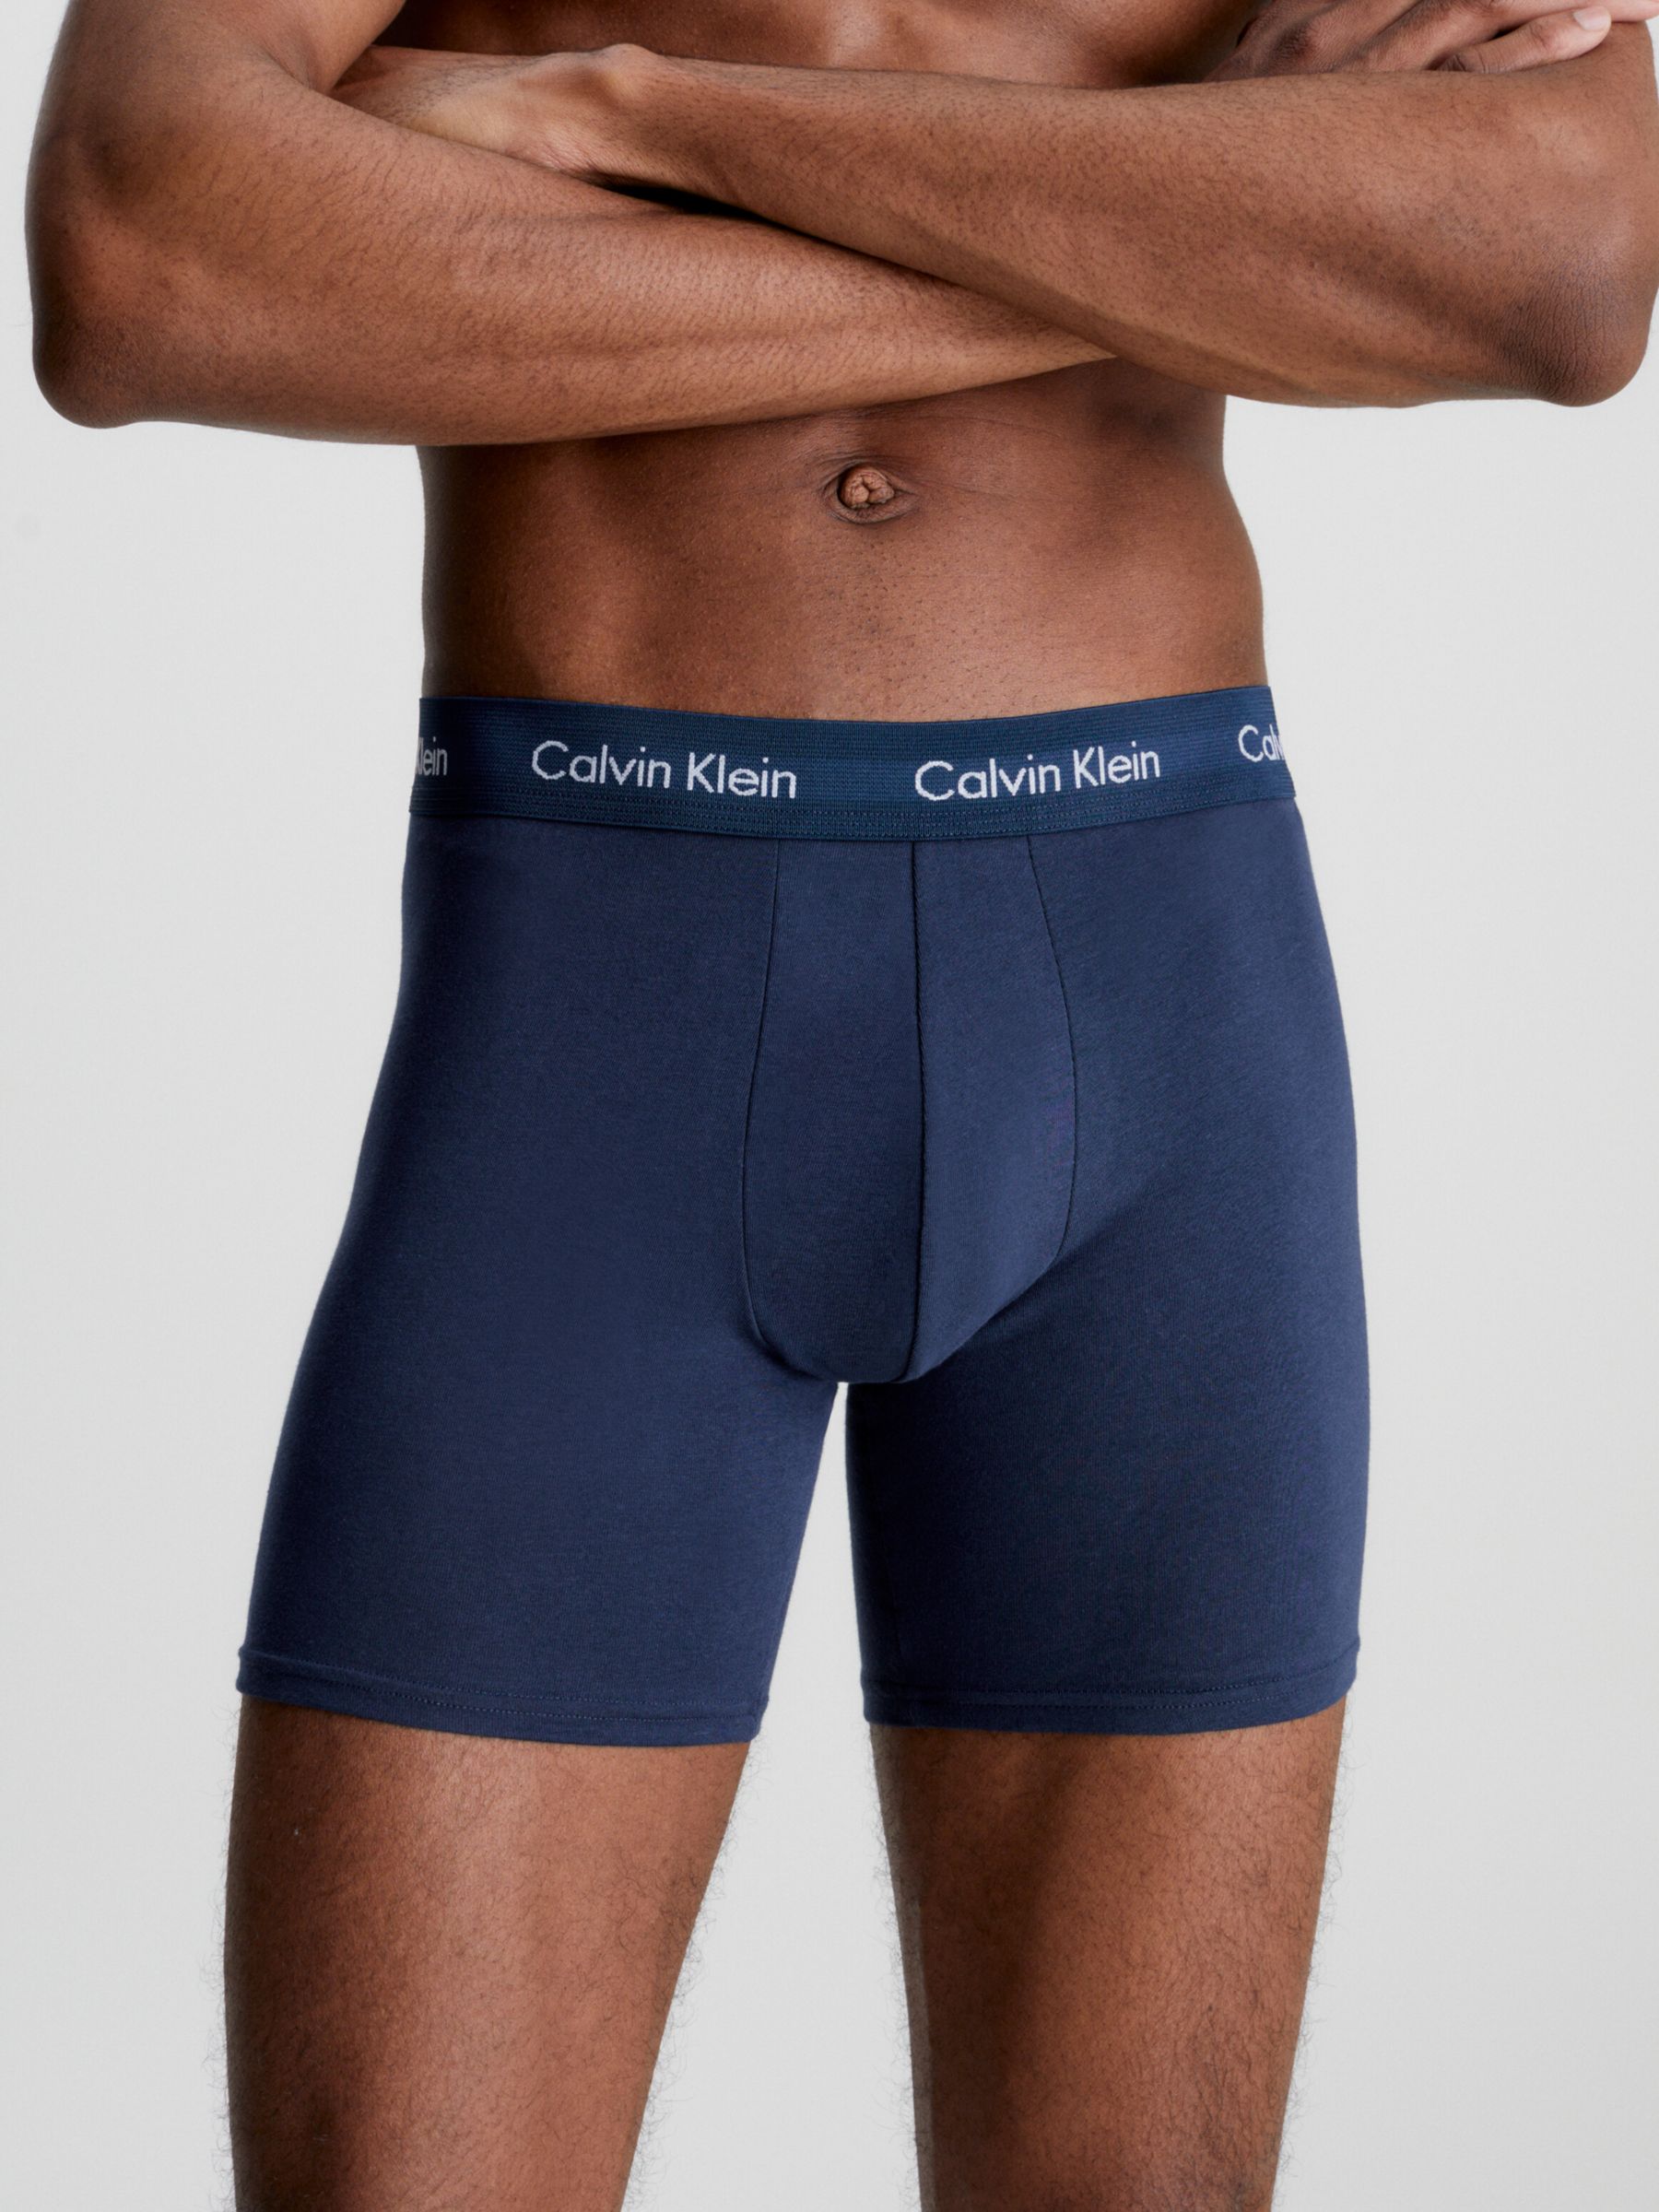 Calvin Klein Cotton Stretch Boxer Brief, Pack of 3, Black/Blue